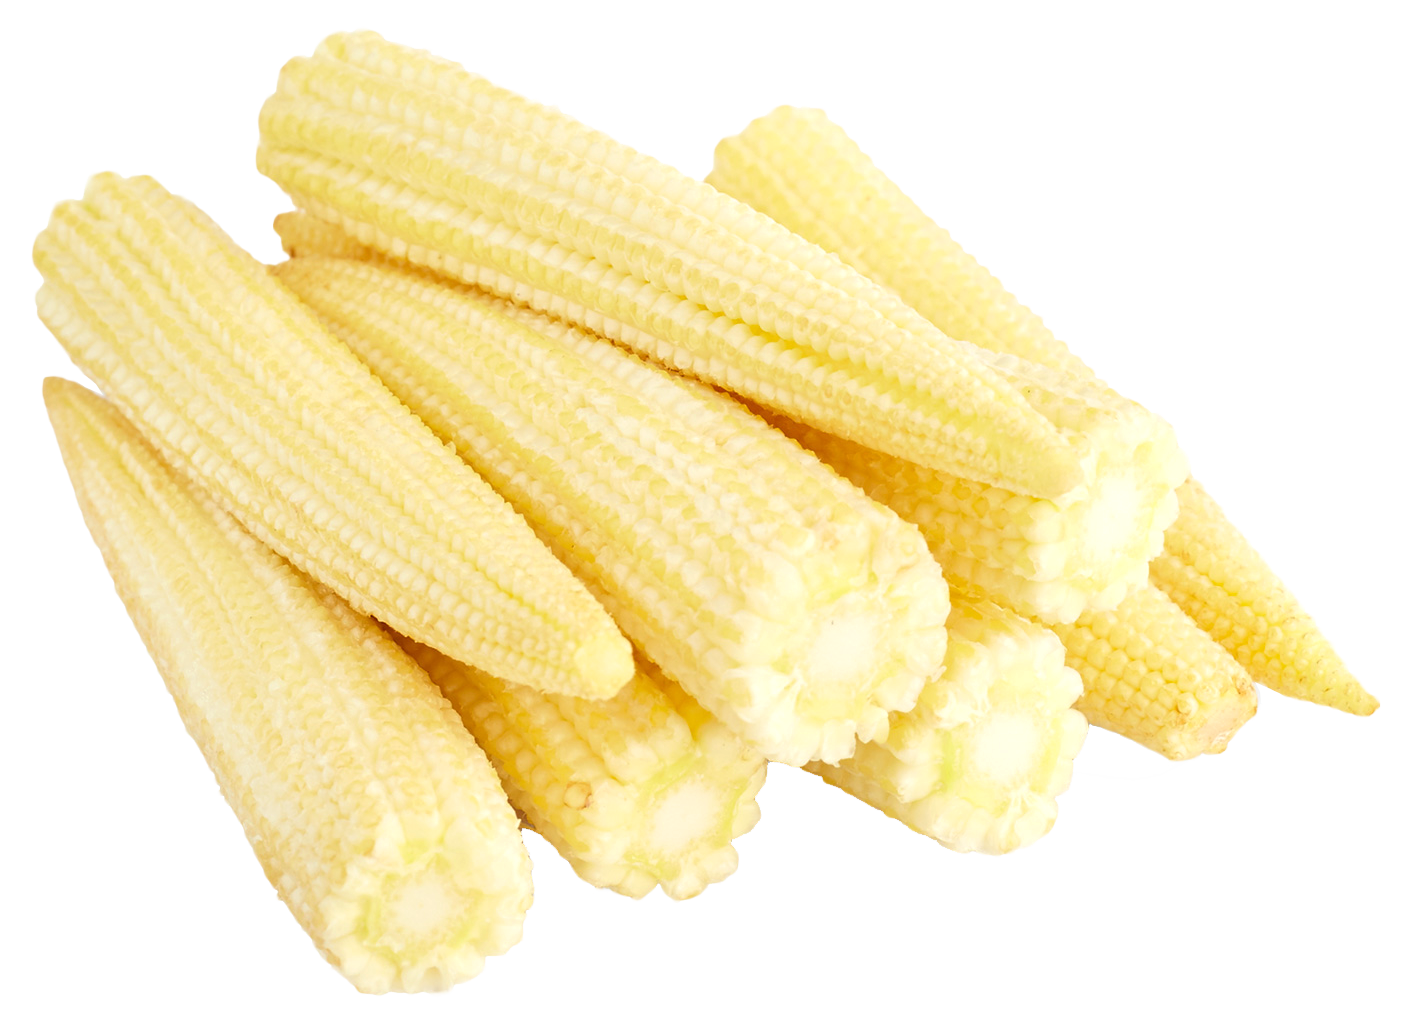 corn clipart baby corn